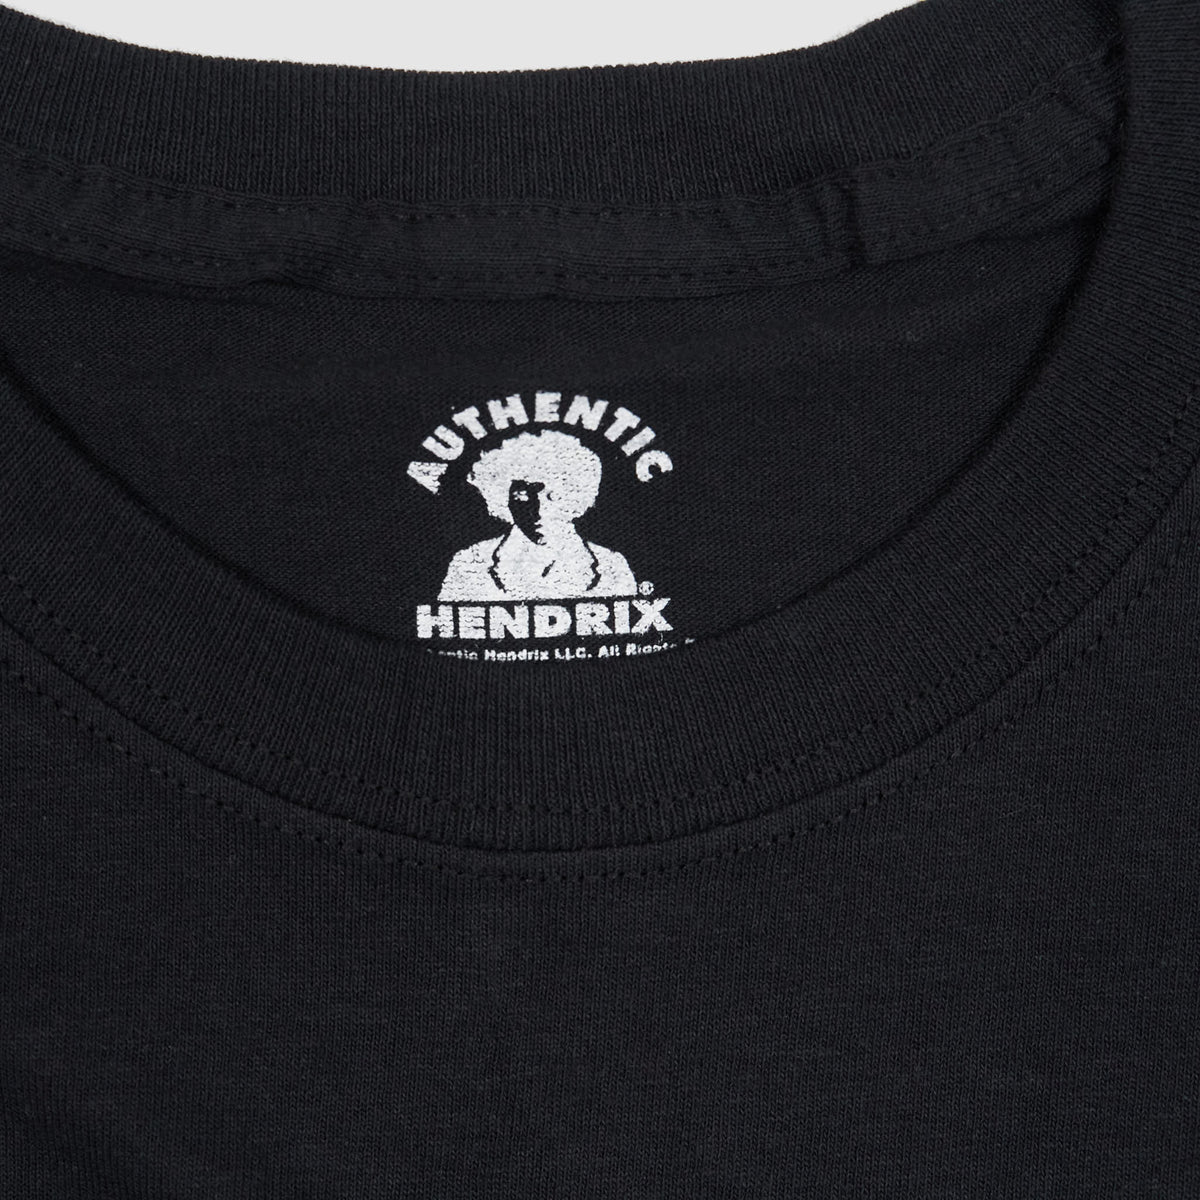 Jimi Hendrix Antlanta  Festival 1970 Crew Neck Basic Classic Rock T-Shirt